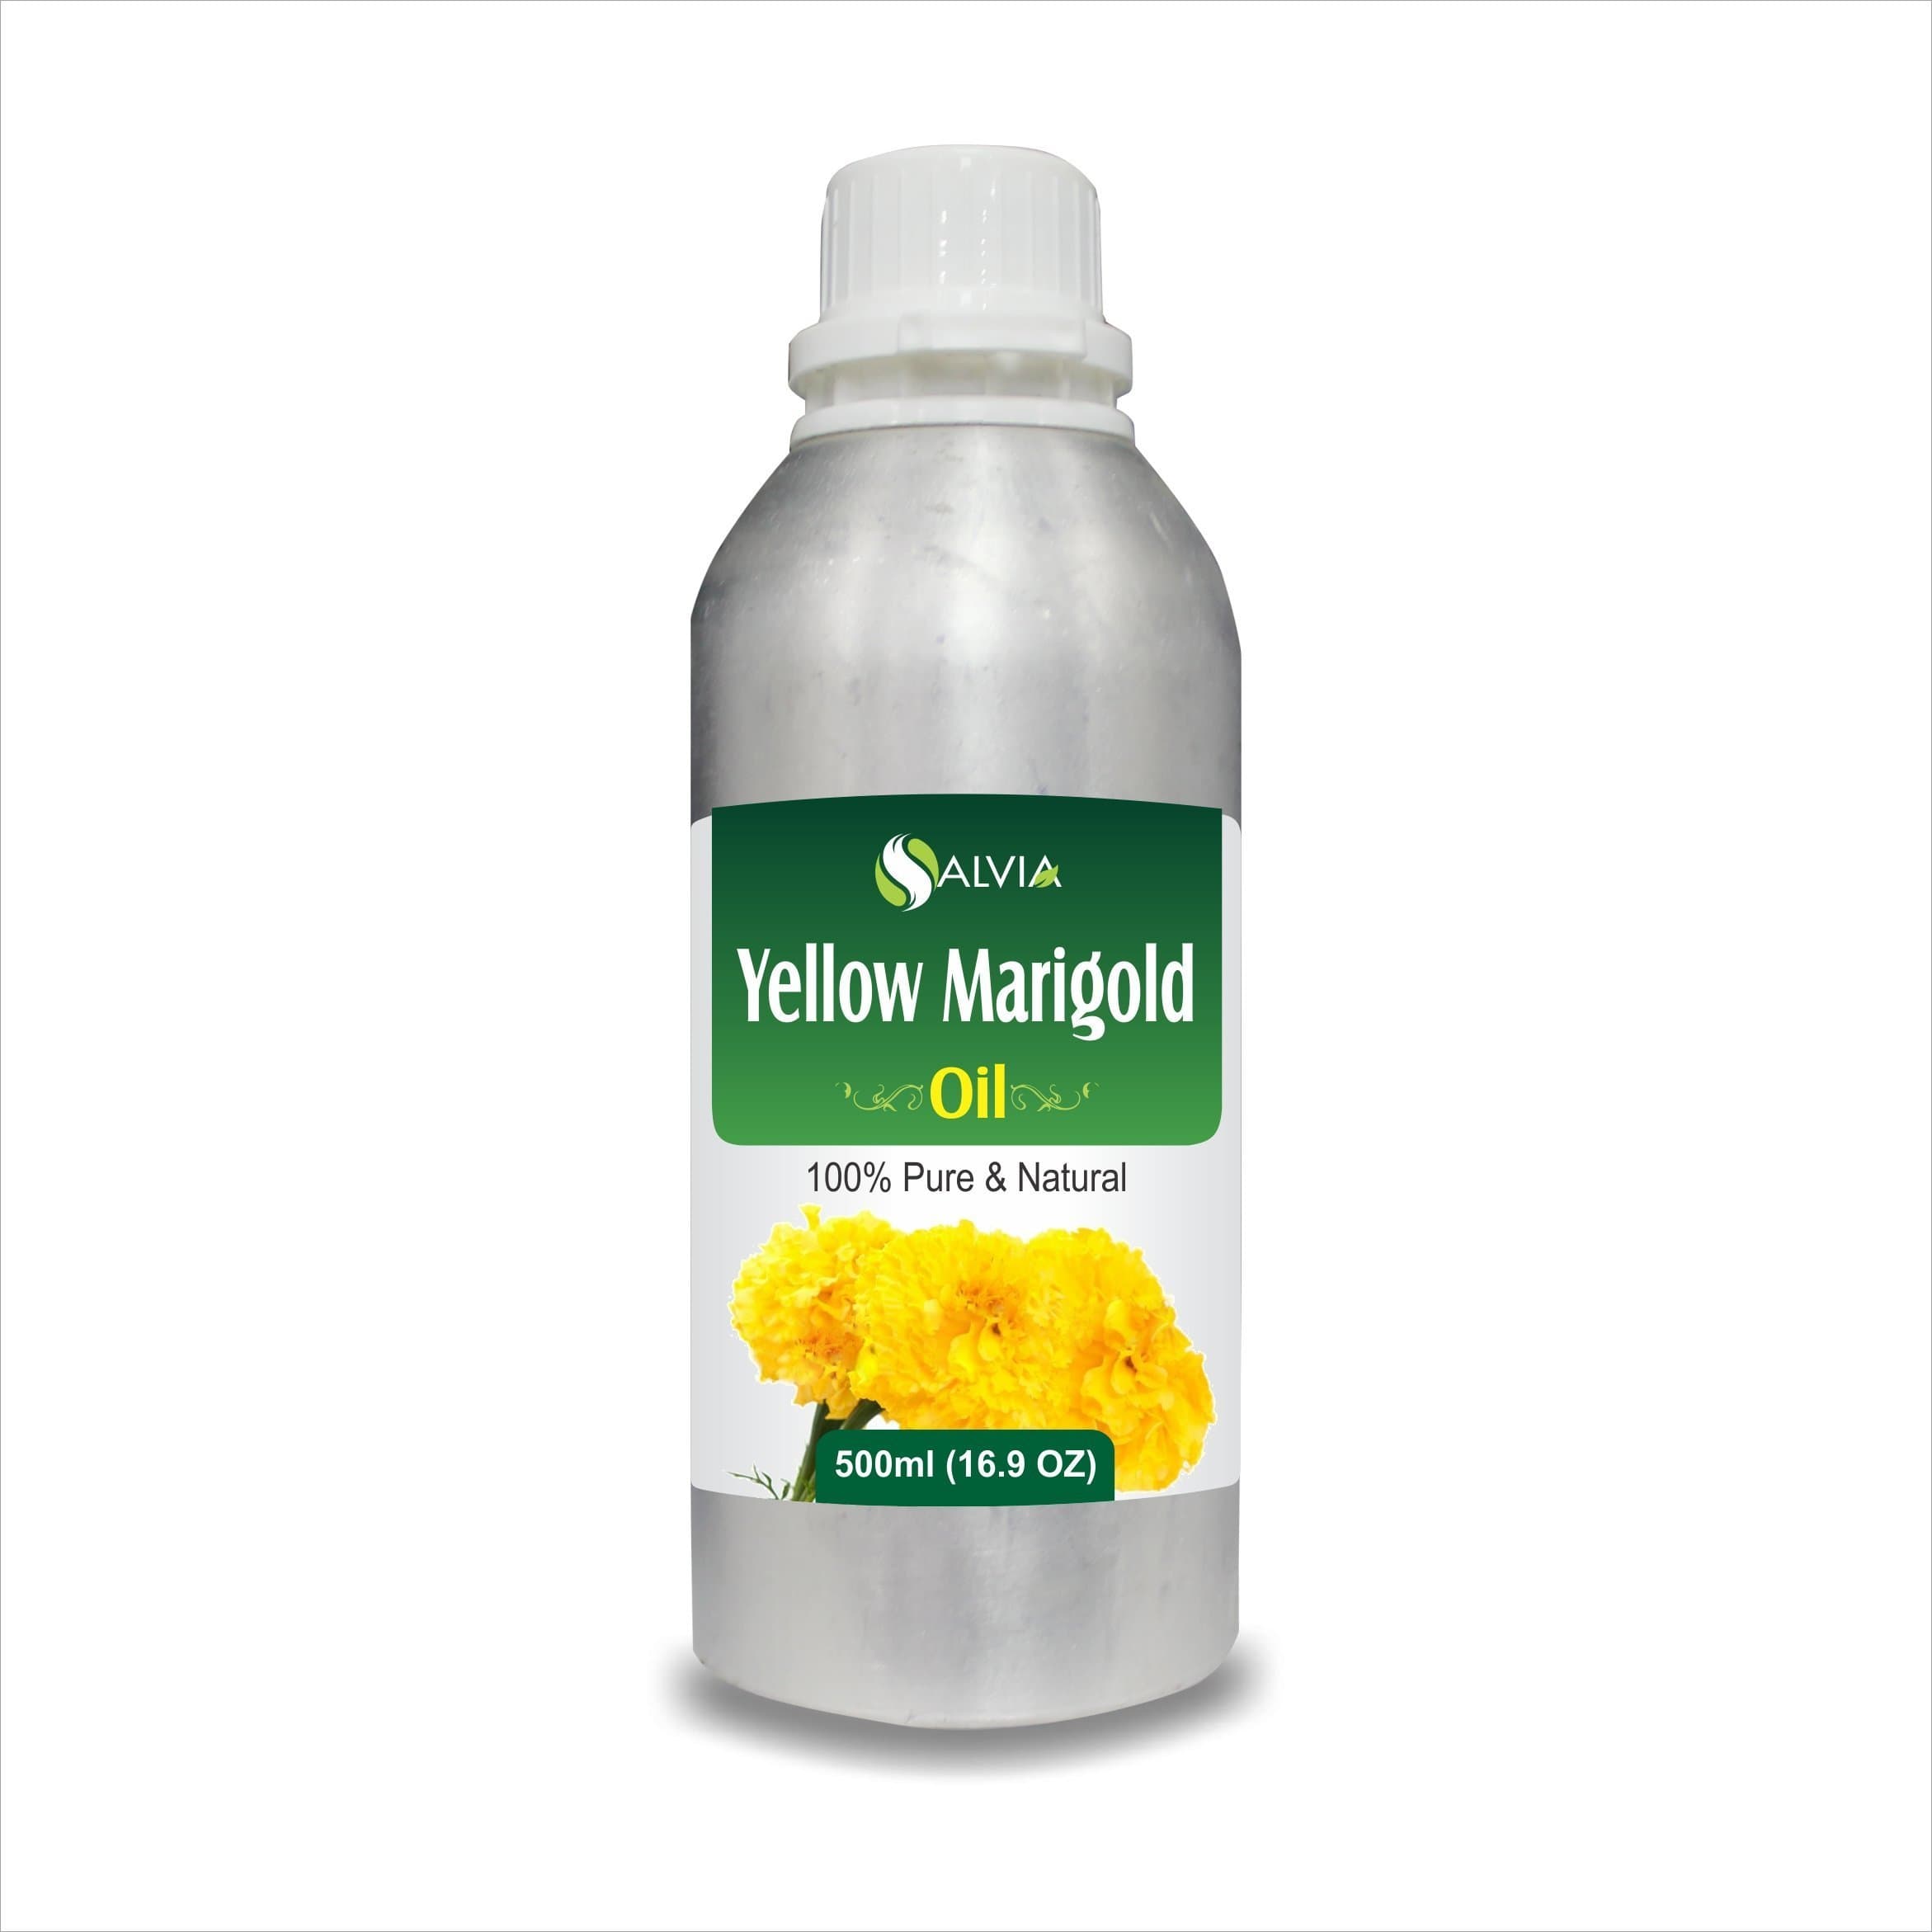 yellow marigold oil benefits 